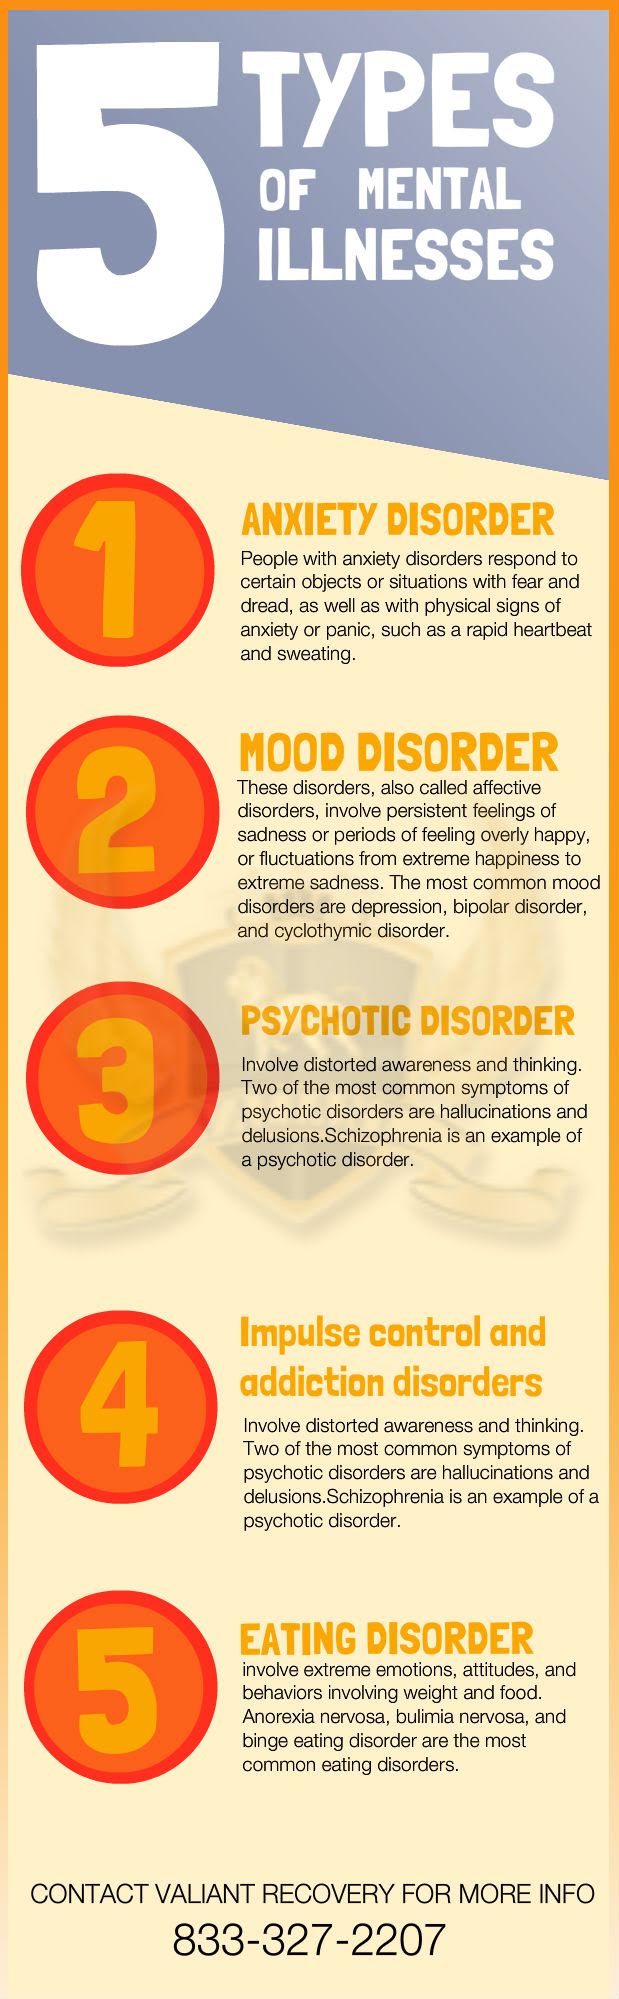 5-types-of-mental-illnesses-valiant-recovery-1-877-958-8247